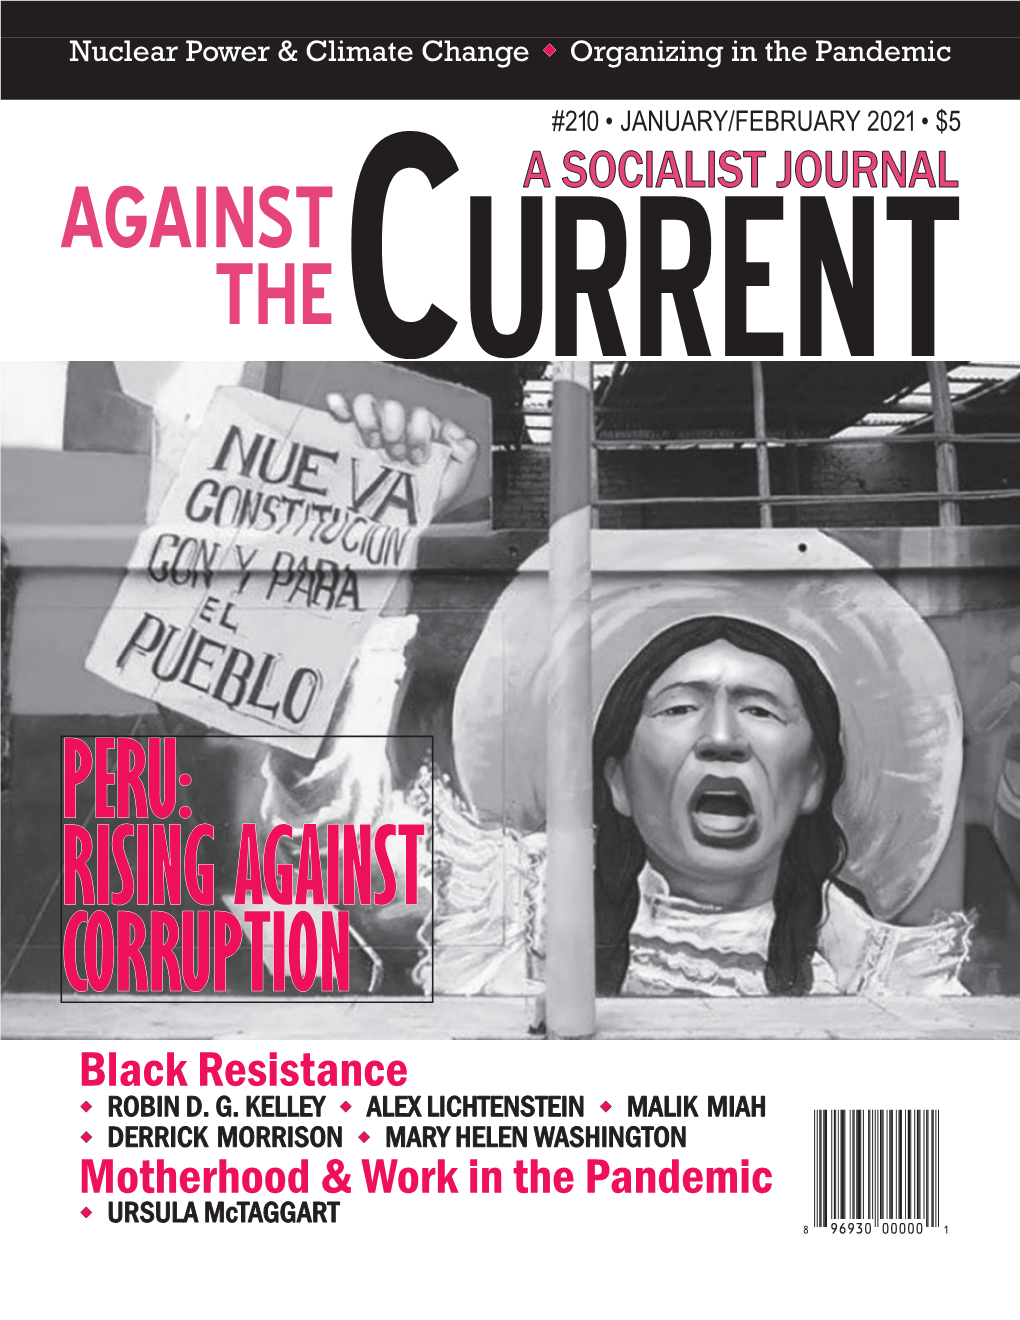 PERU: RISING AGAINST CORRUPTION Black Resistance W ROBIN D